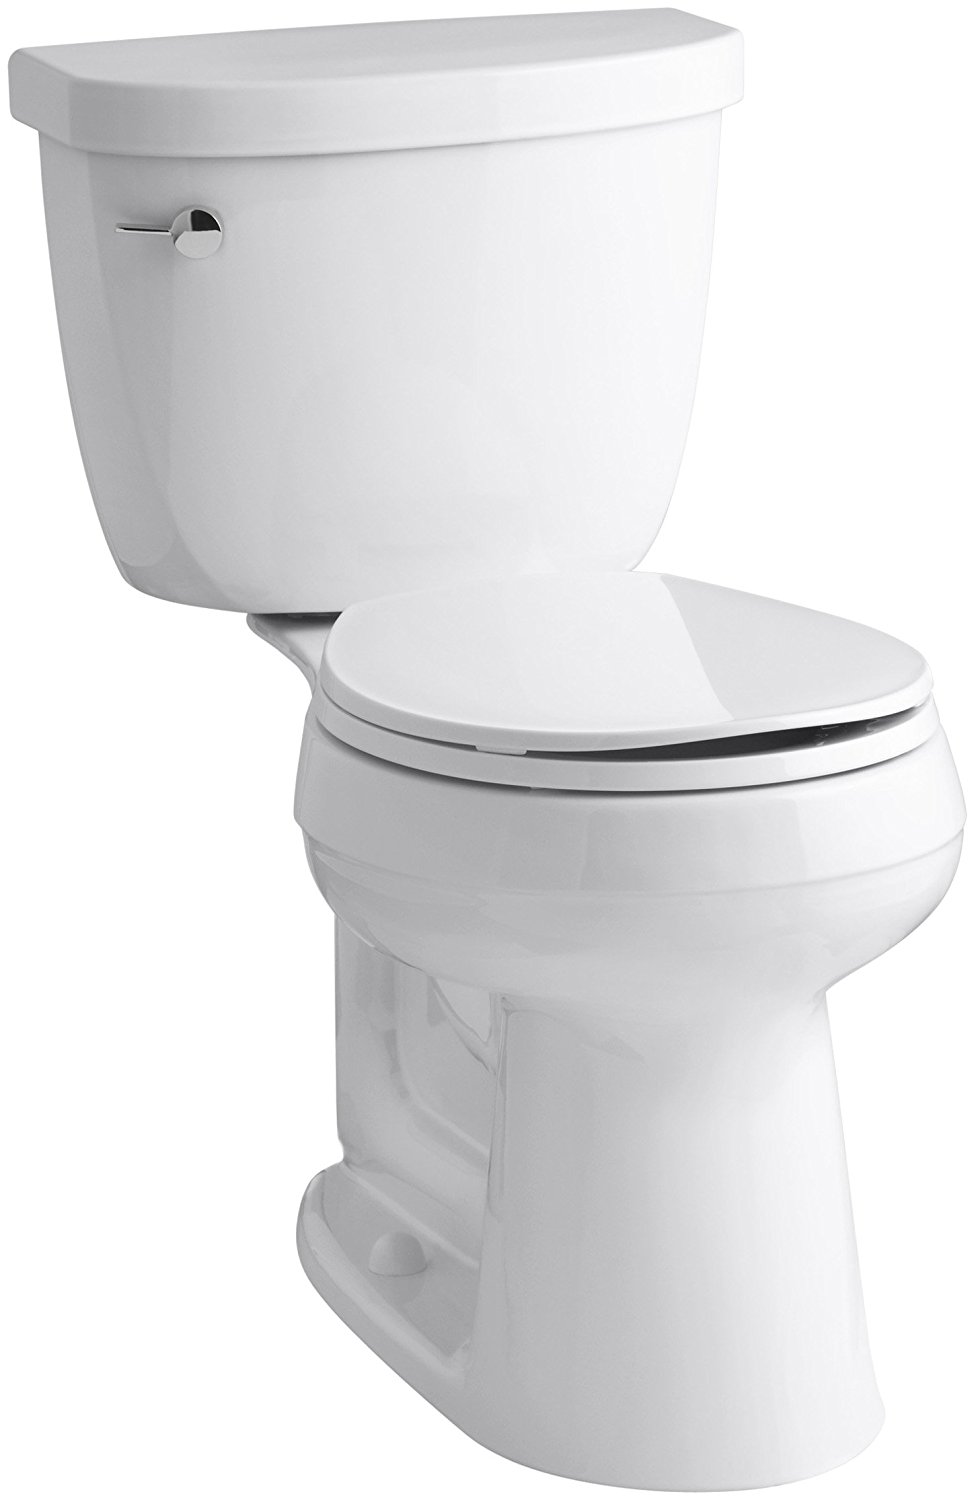 KOHLER K-3887-0 Cimarron Comfort Height Two-Piece Round-Front 1.28 GPF Toilet with AquaPiston Flush Technology and Left-Hand Trip Lever, White